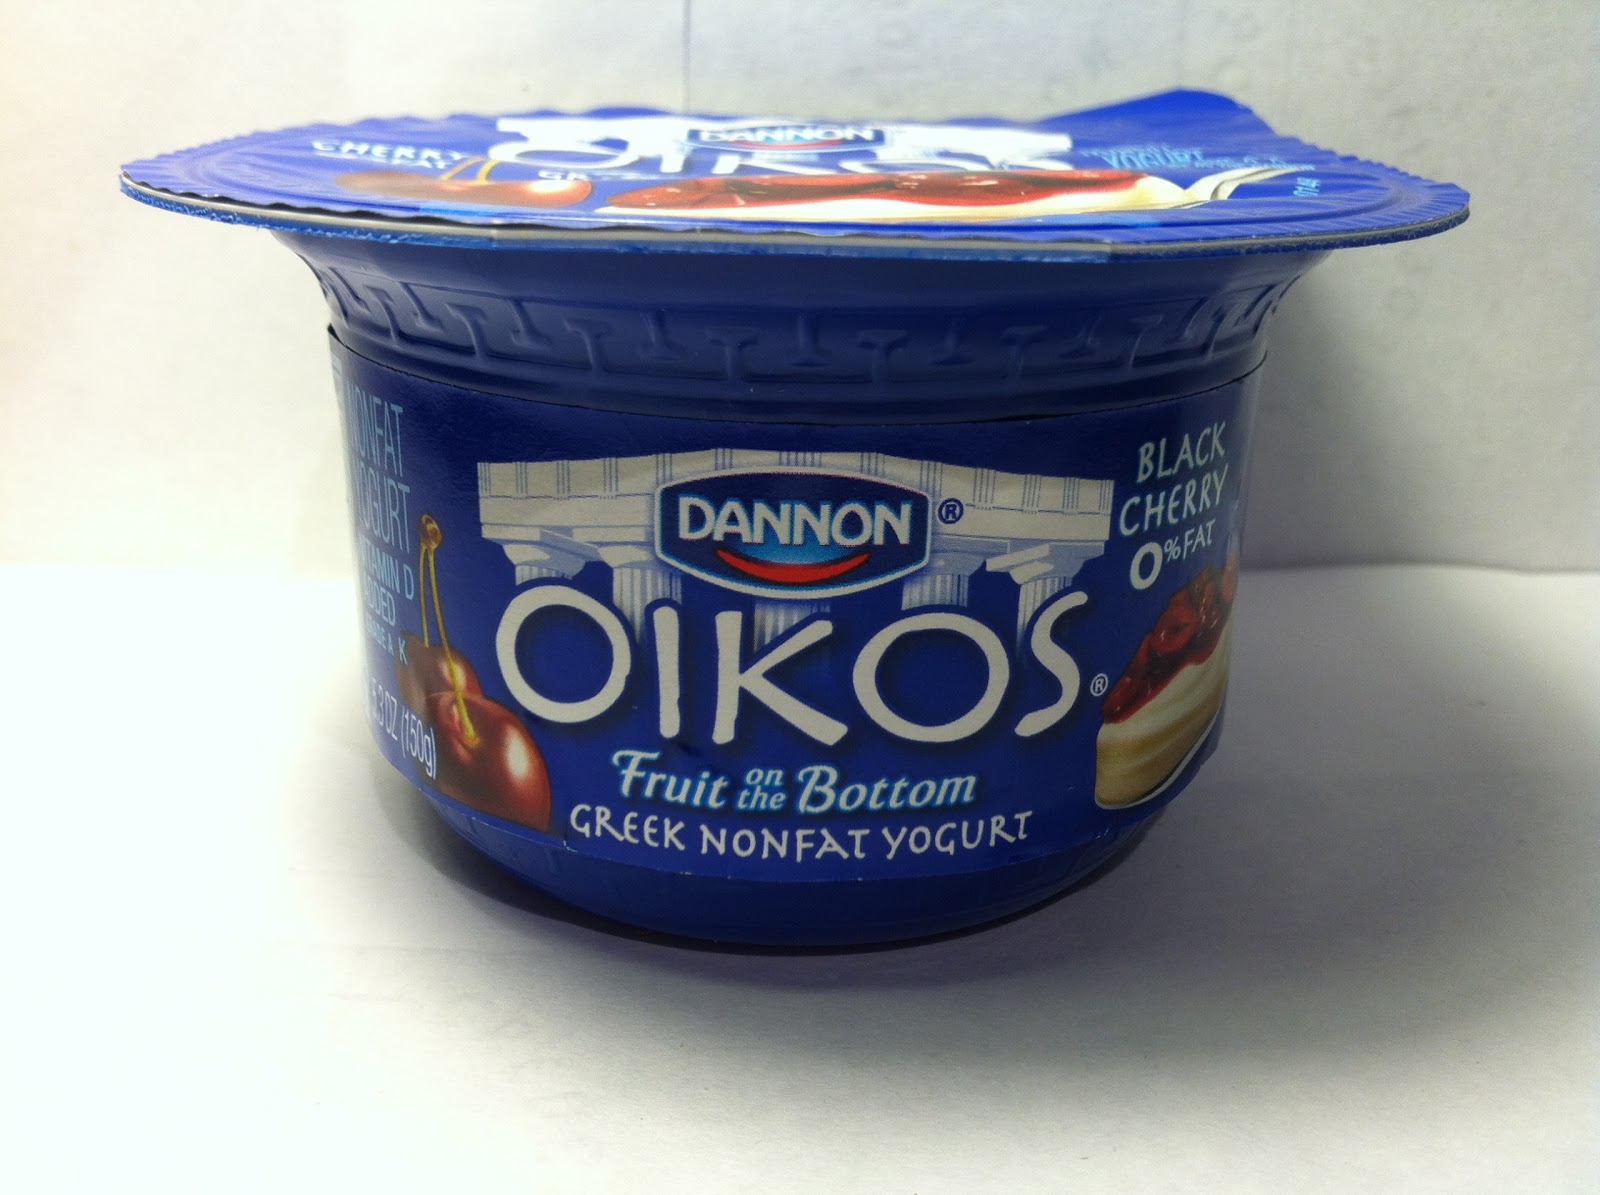 crazy-food-dude-review-dannon-oikos-black-cherry-0-greek-yogurt